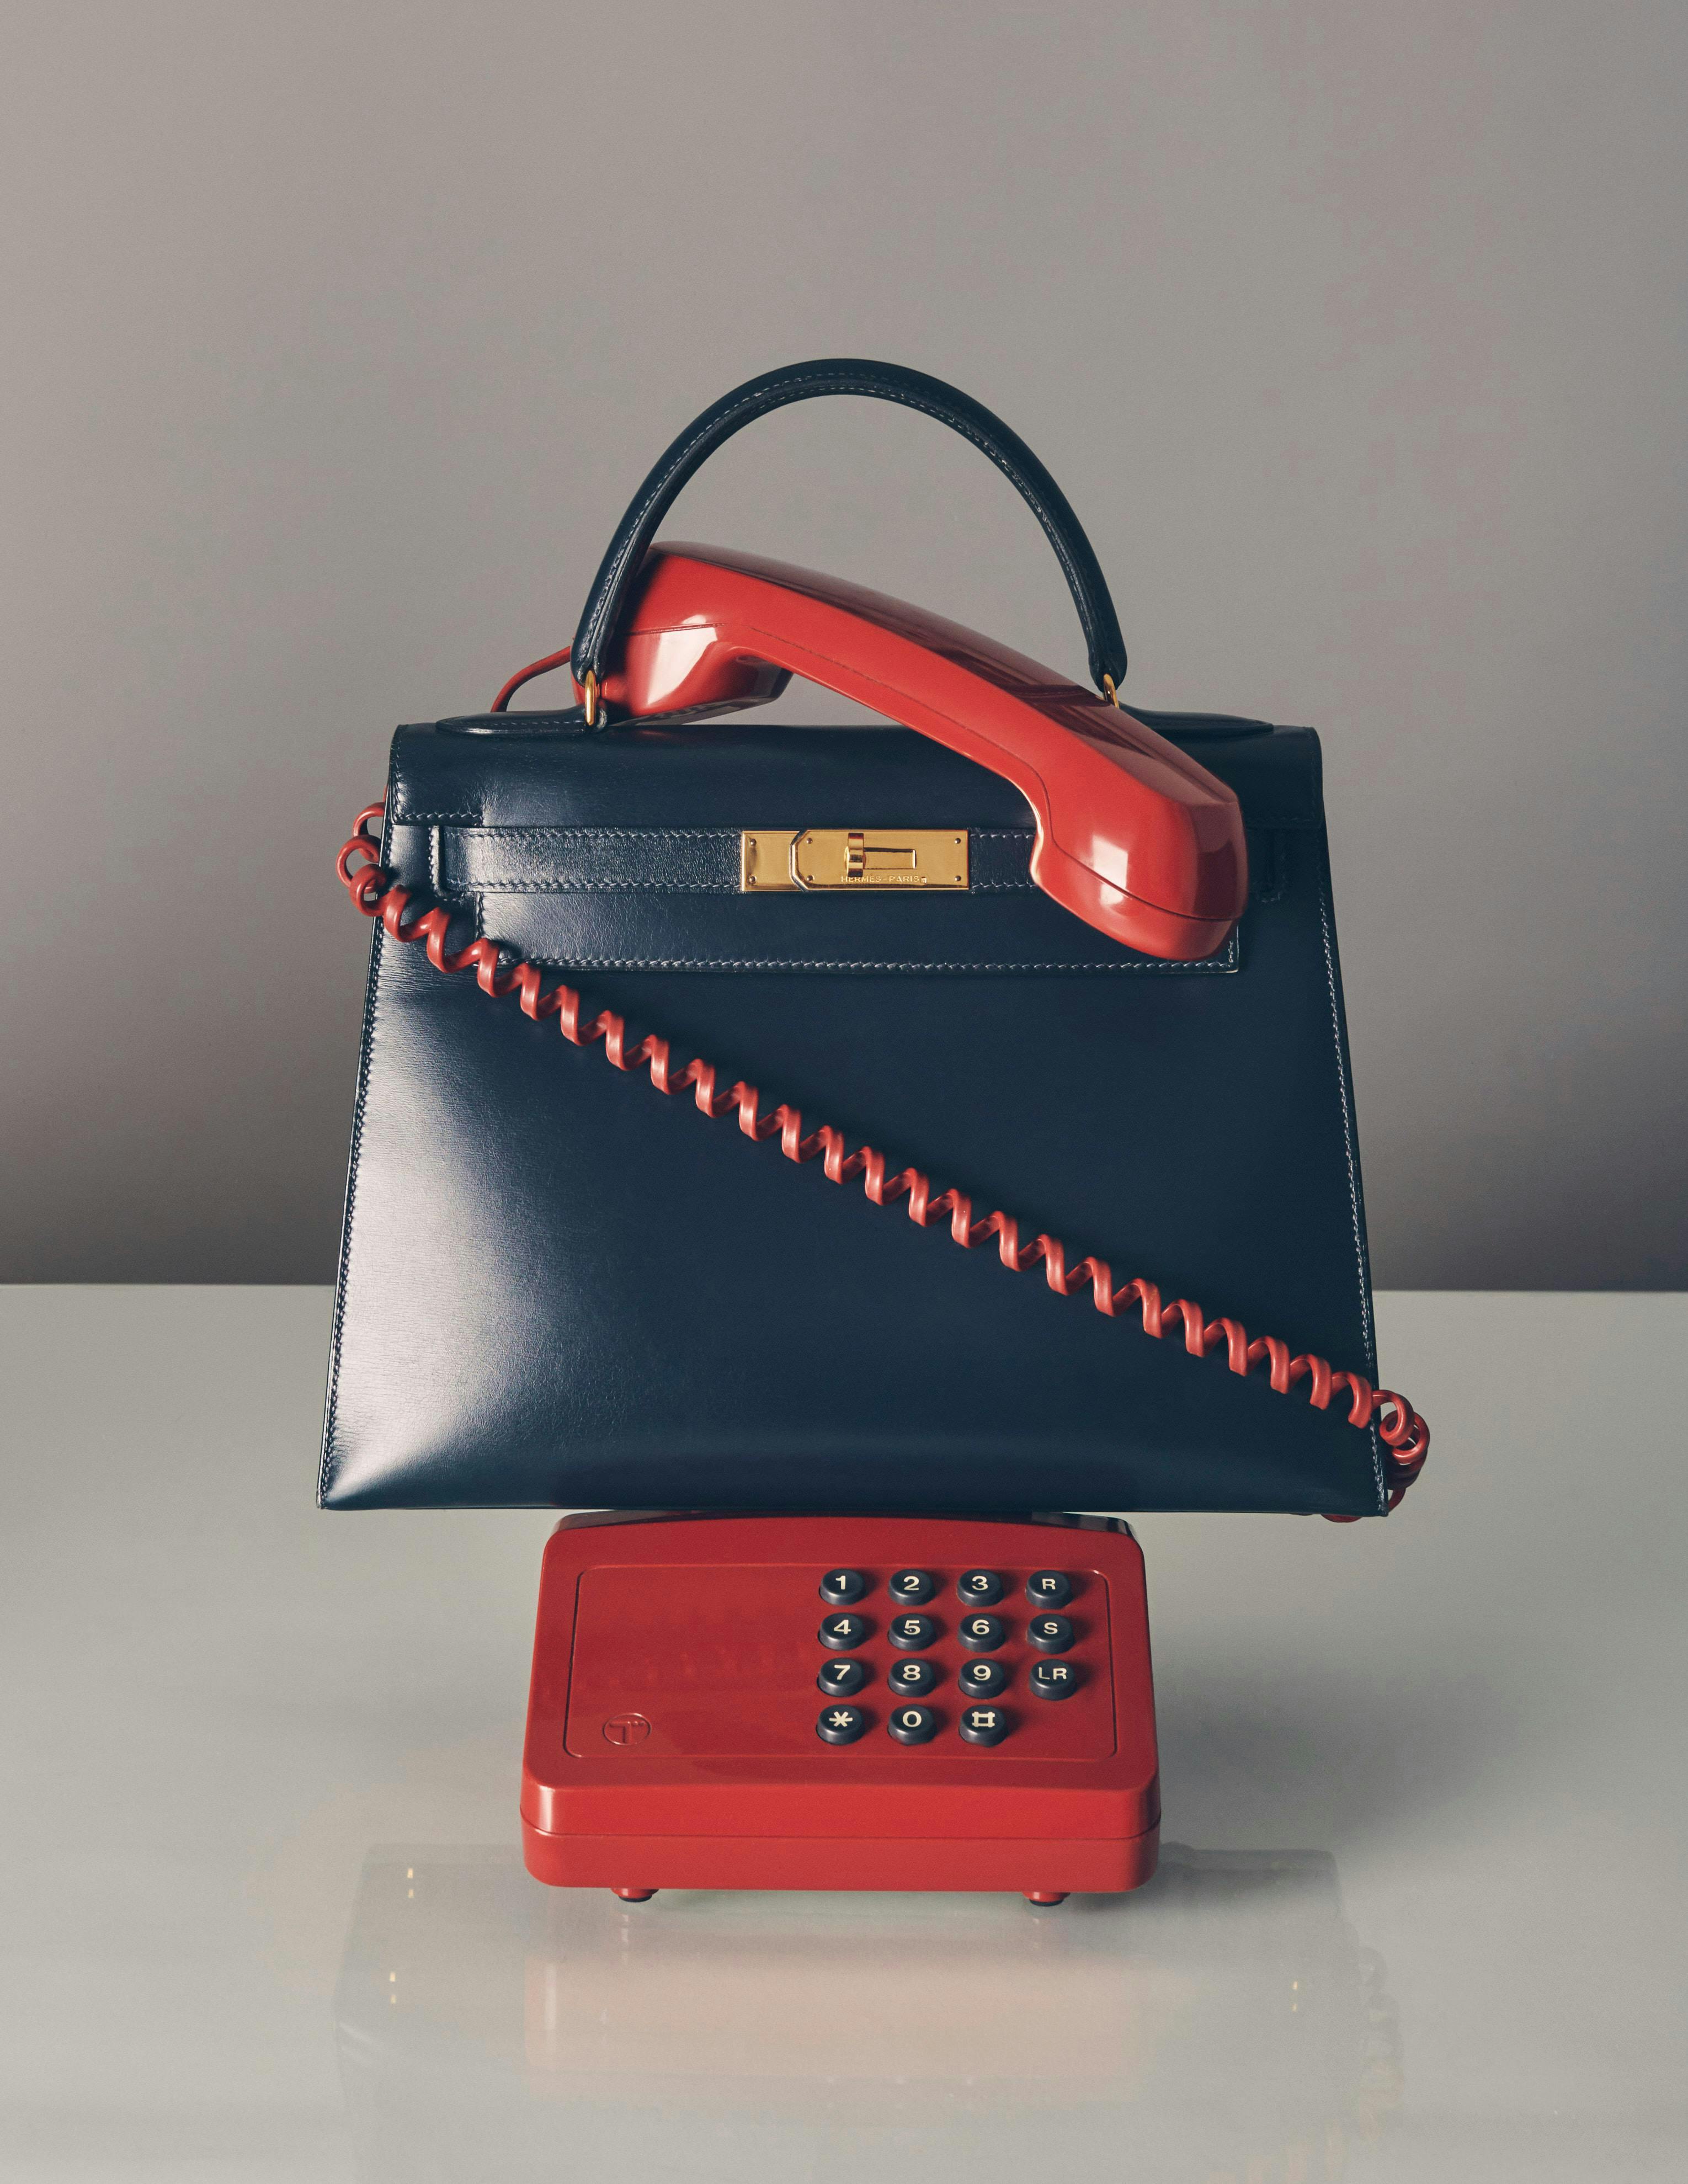 accessories bag handbag purse electronics phone